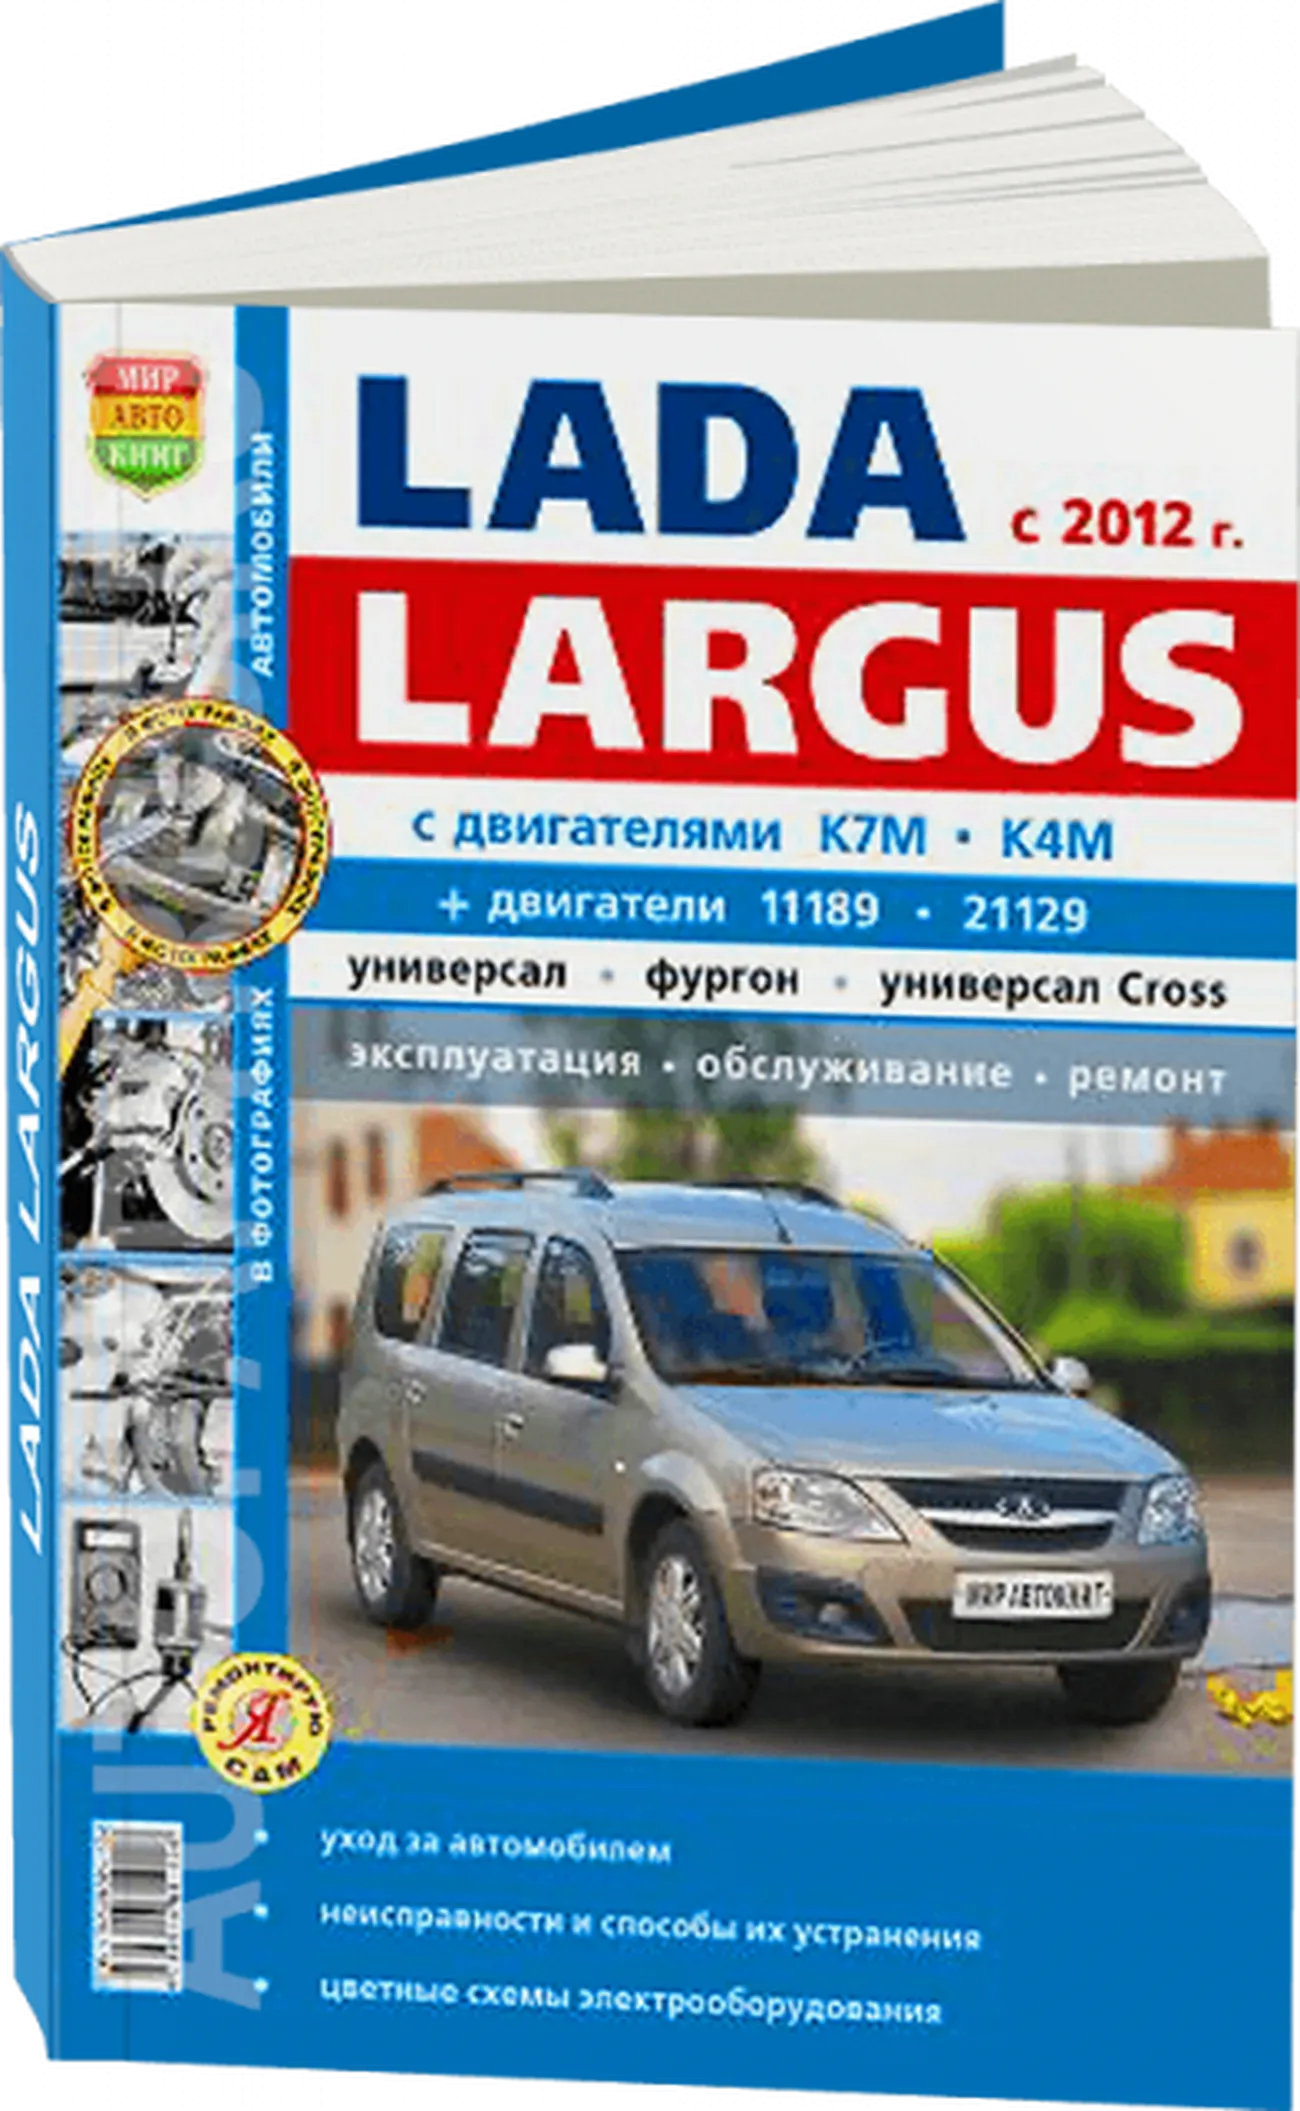 Книга: LADA LARGUS (б) с 2012 г.в., рем., экспл., то, Ч/Б фото., сер. ЯРС | Мир Автокниг